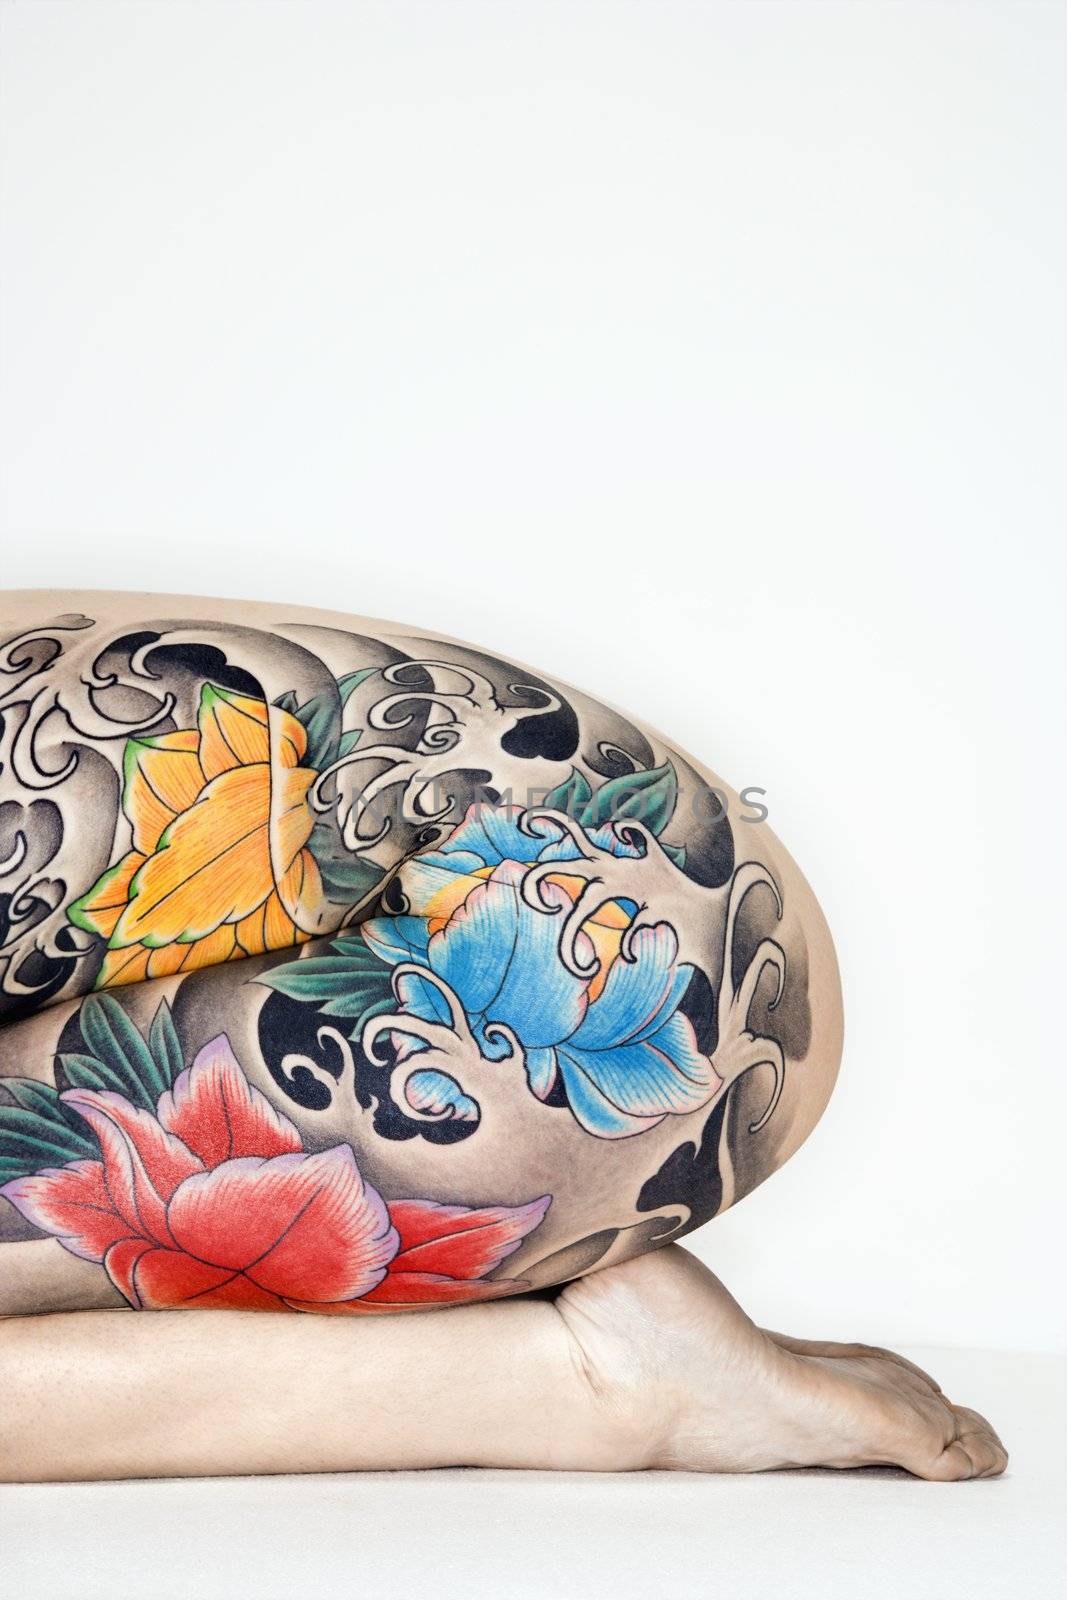 Tattooed woman by iofoto